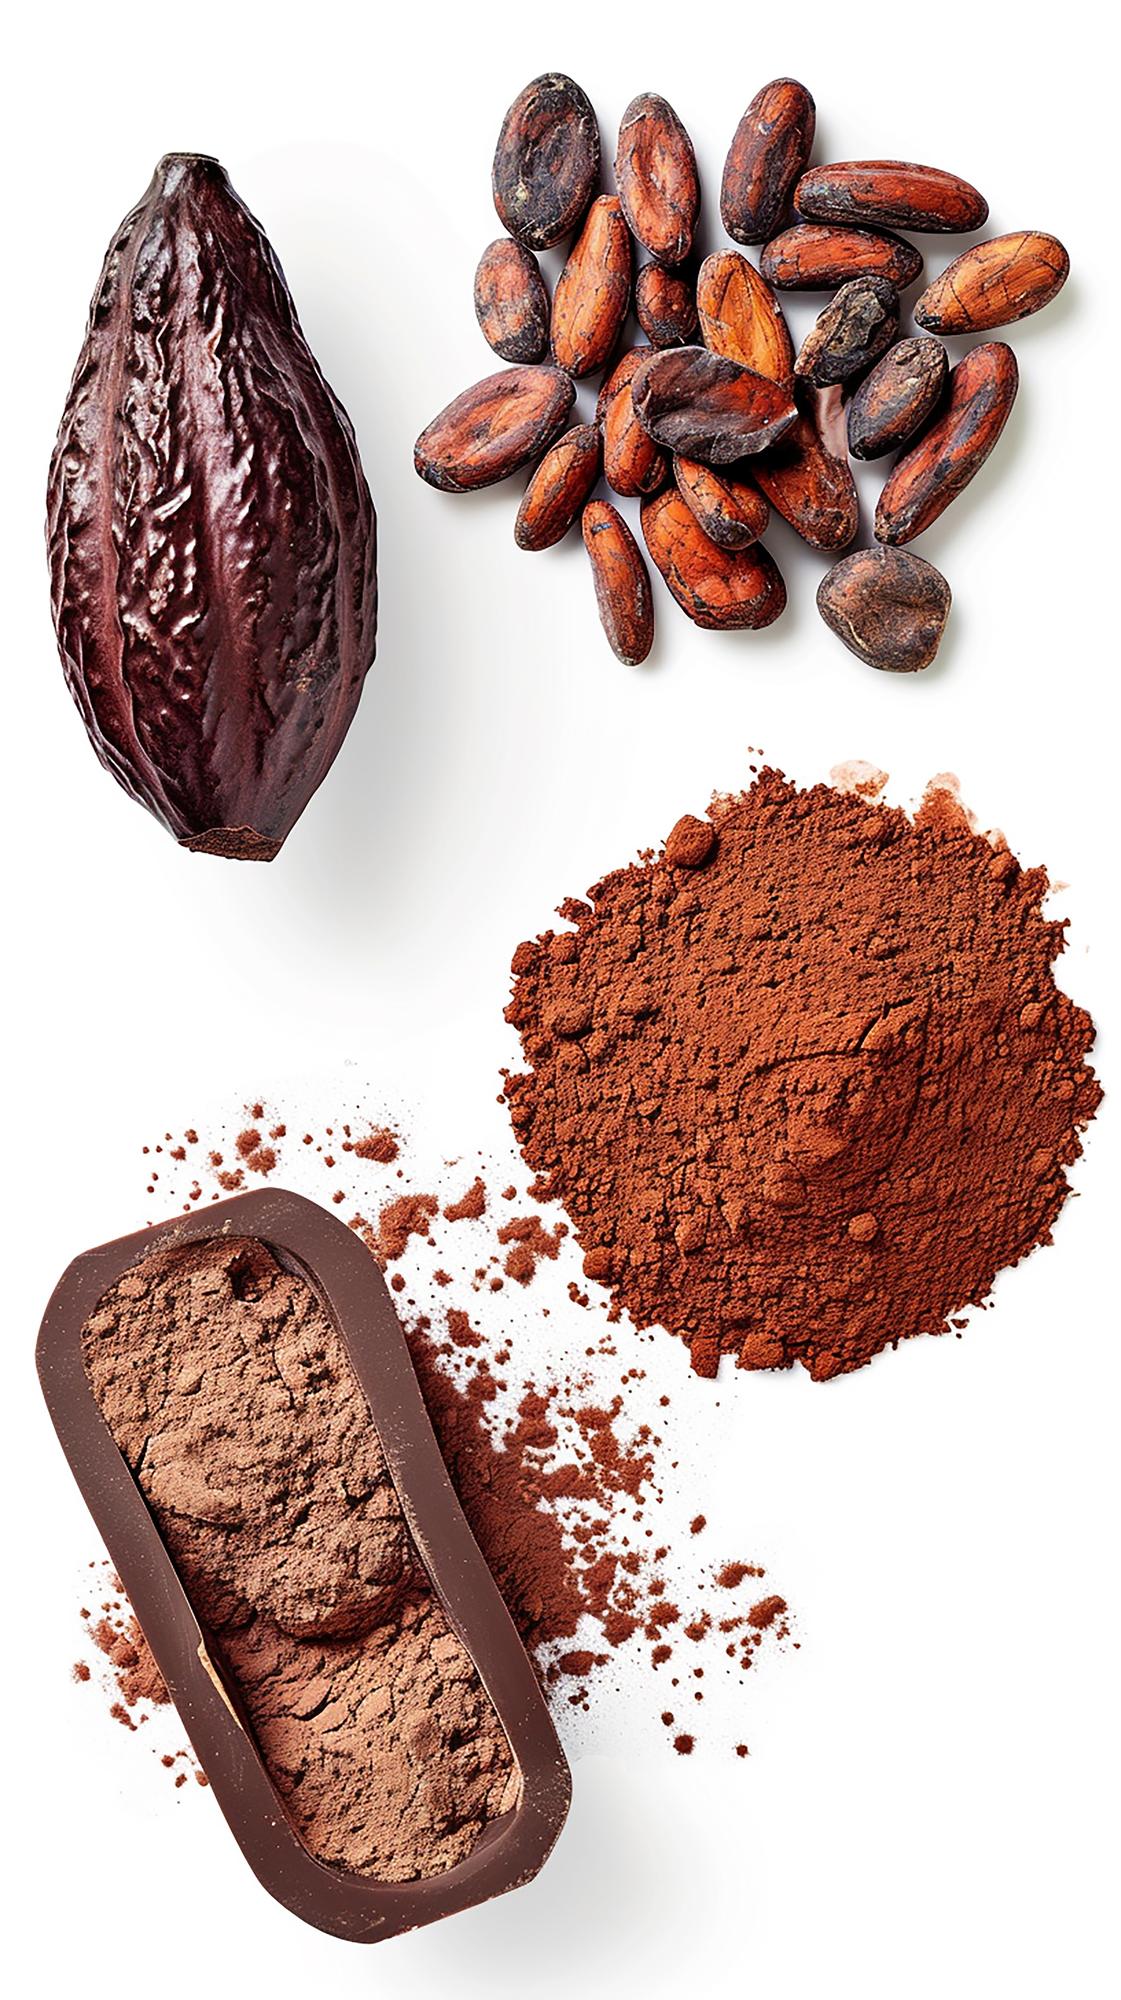 cocoa-powder-ingredients-cocoa-pod-cocoa-beans